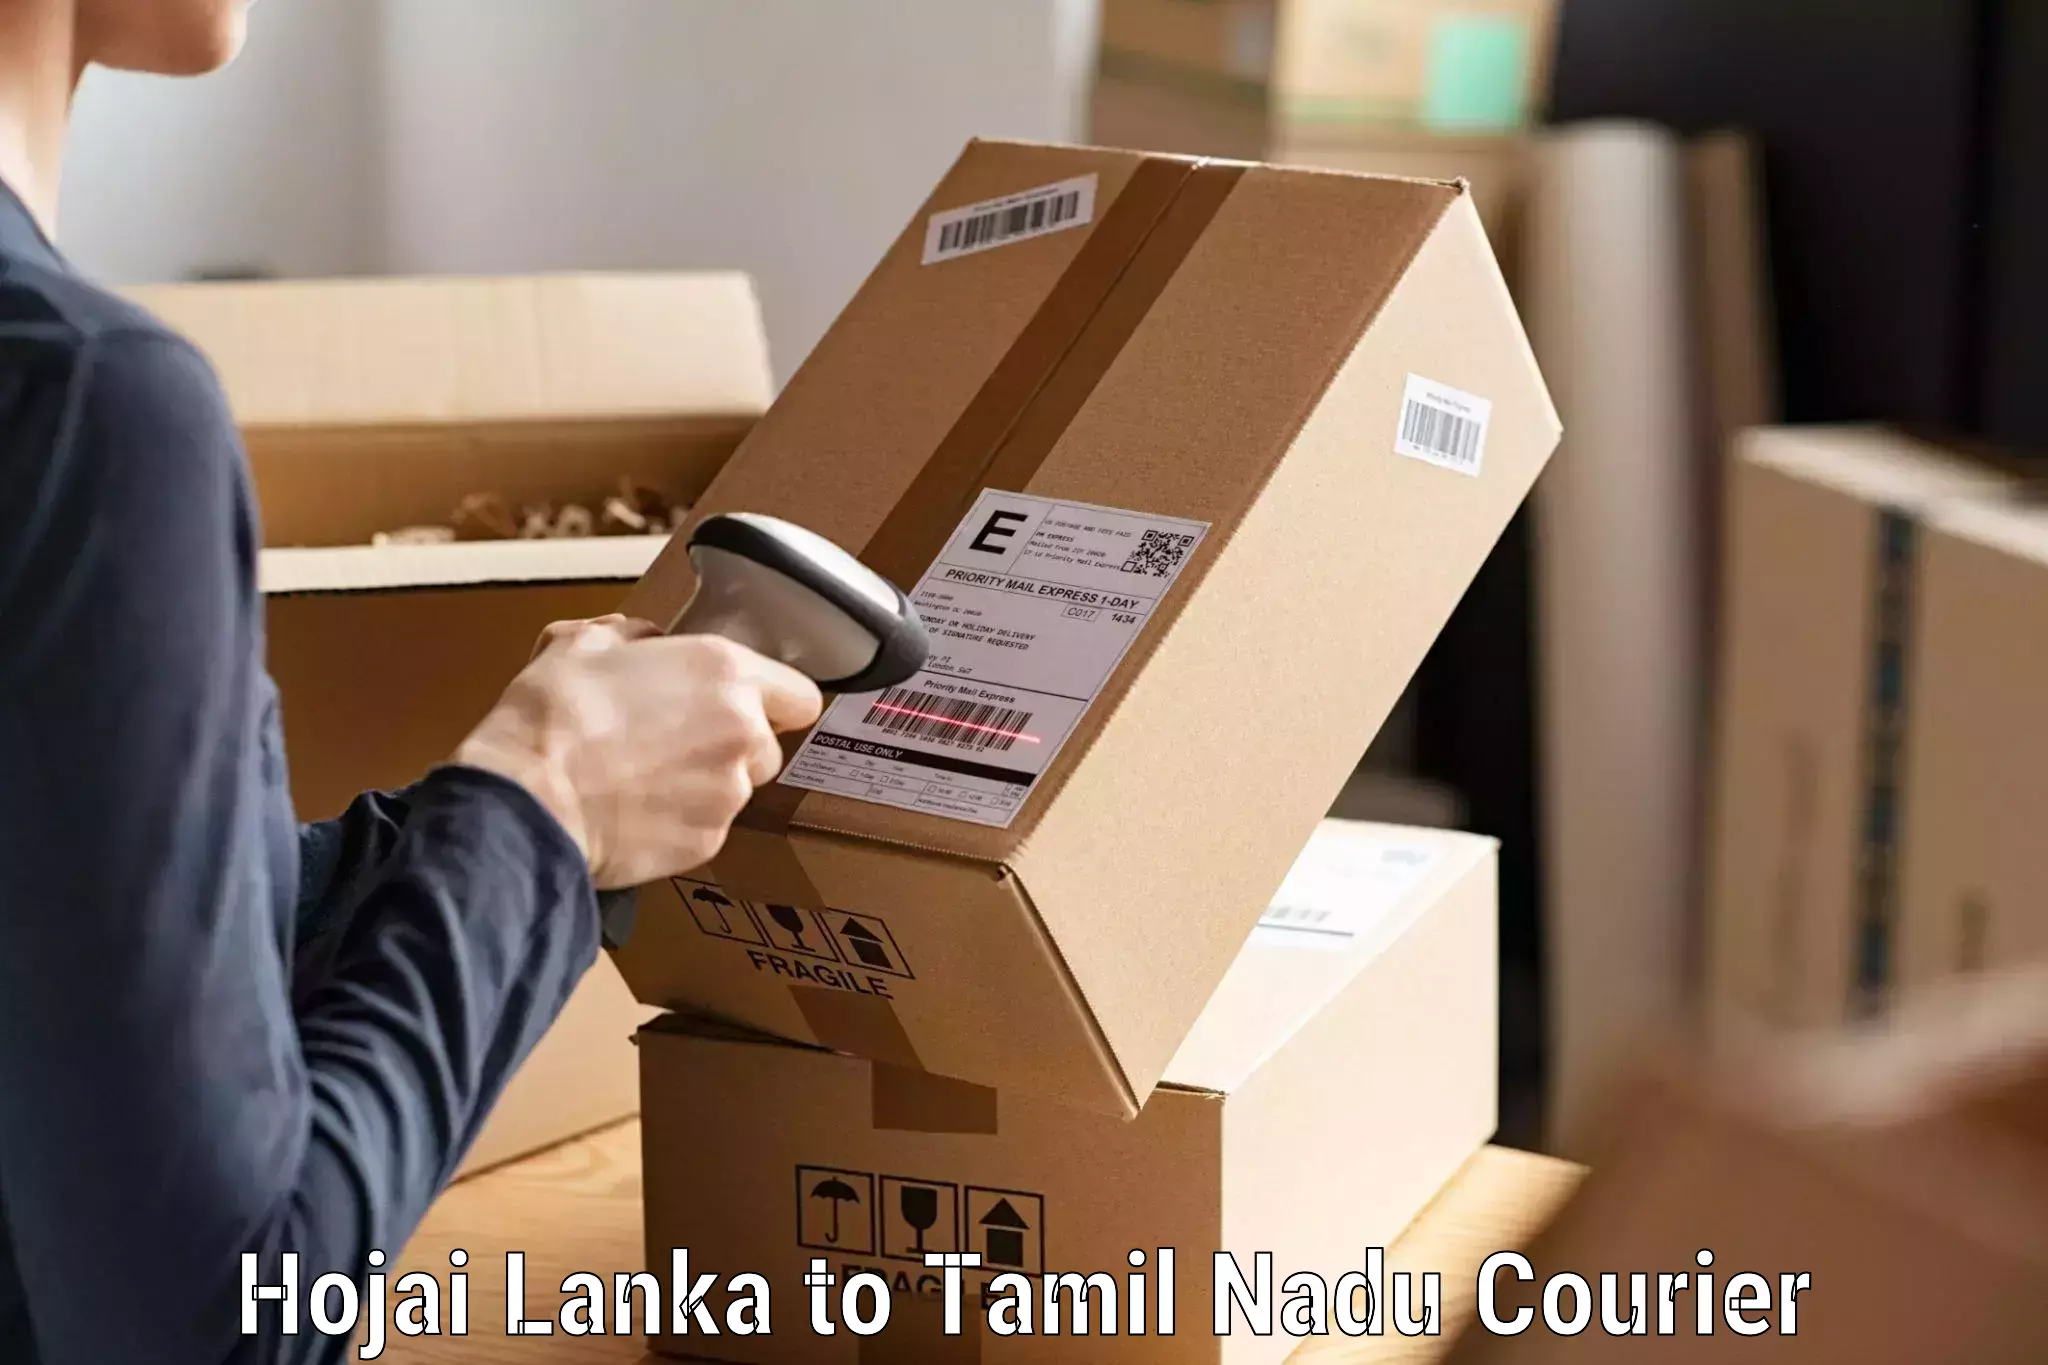 Parcel handling and care Hojai Lanka to Madurai